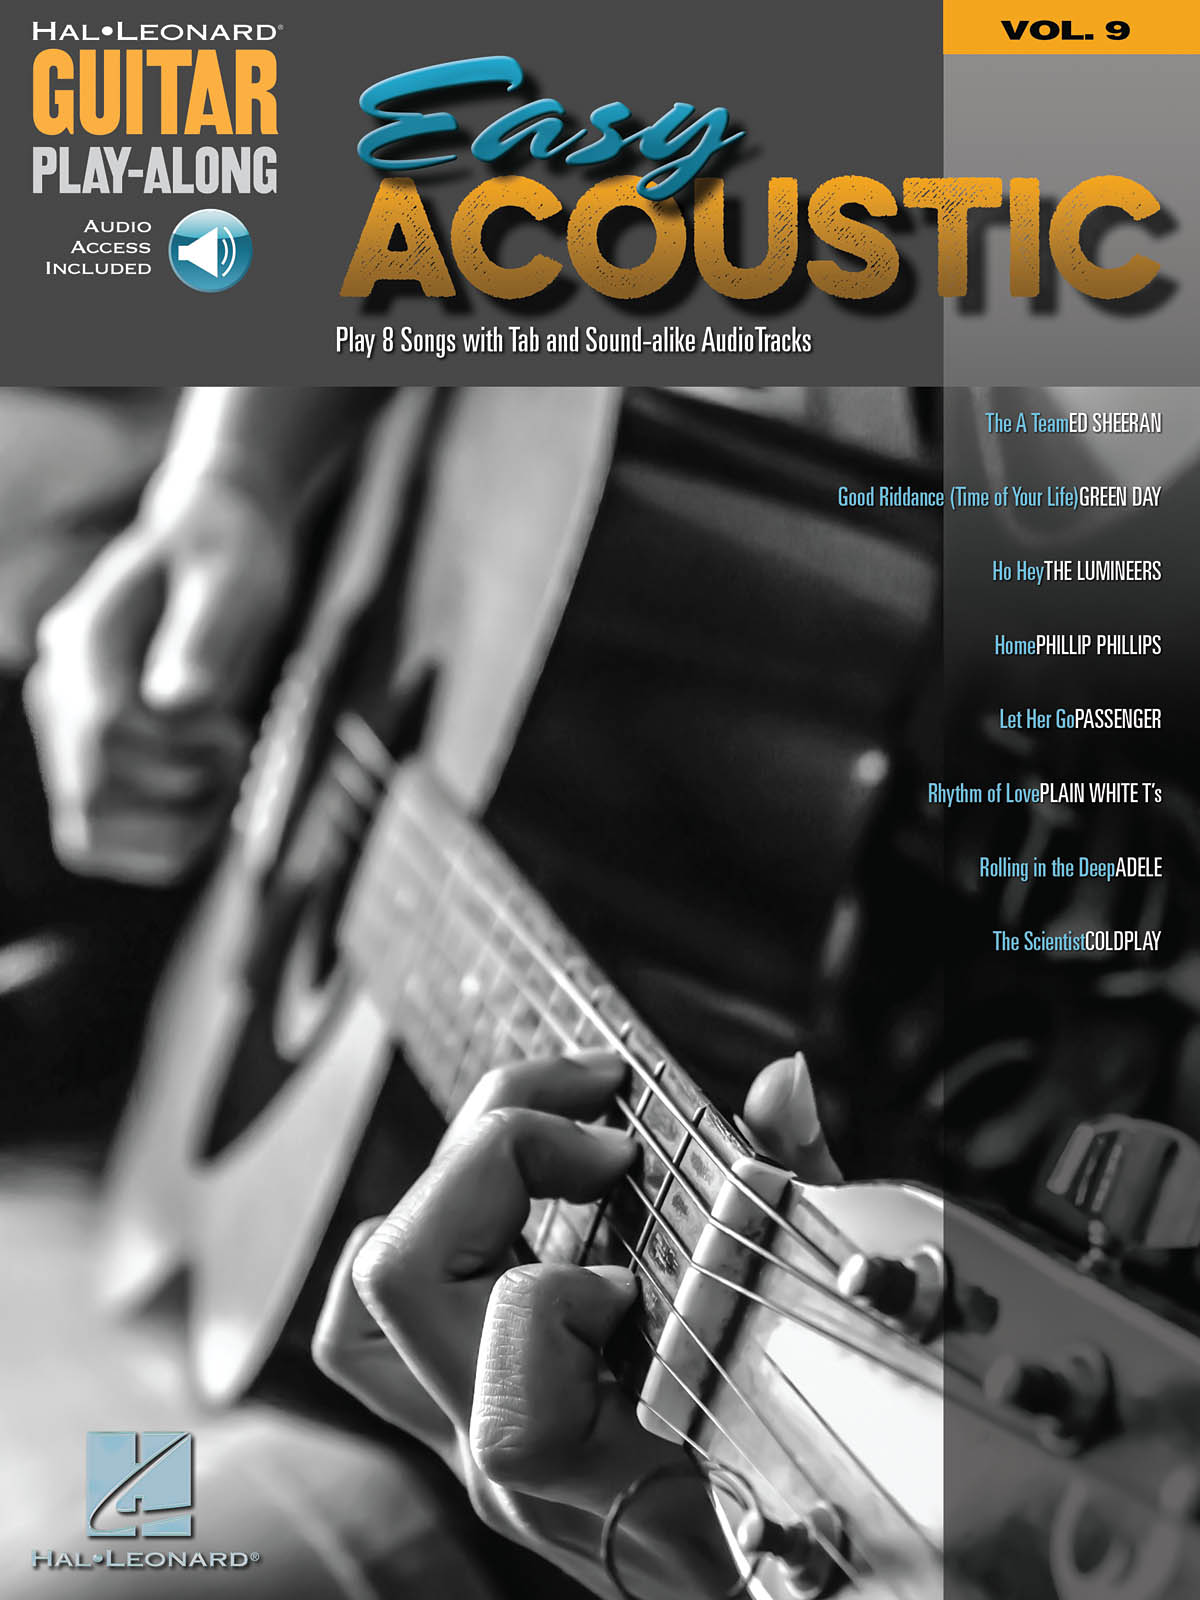 Hal Leonard Guitar Play-Along Vol. 9 Easy Acoustic Songs